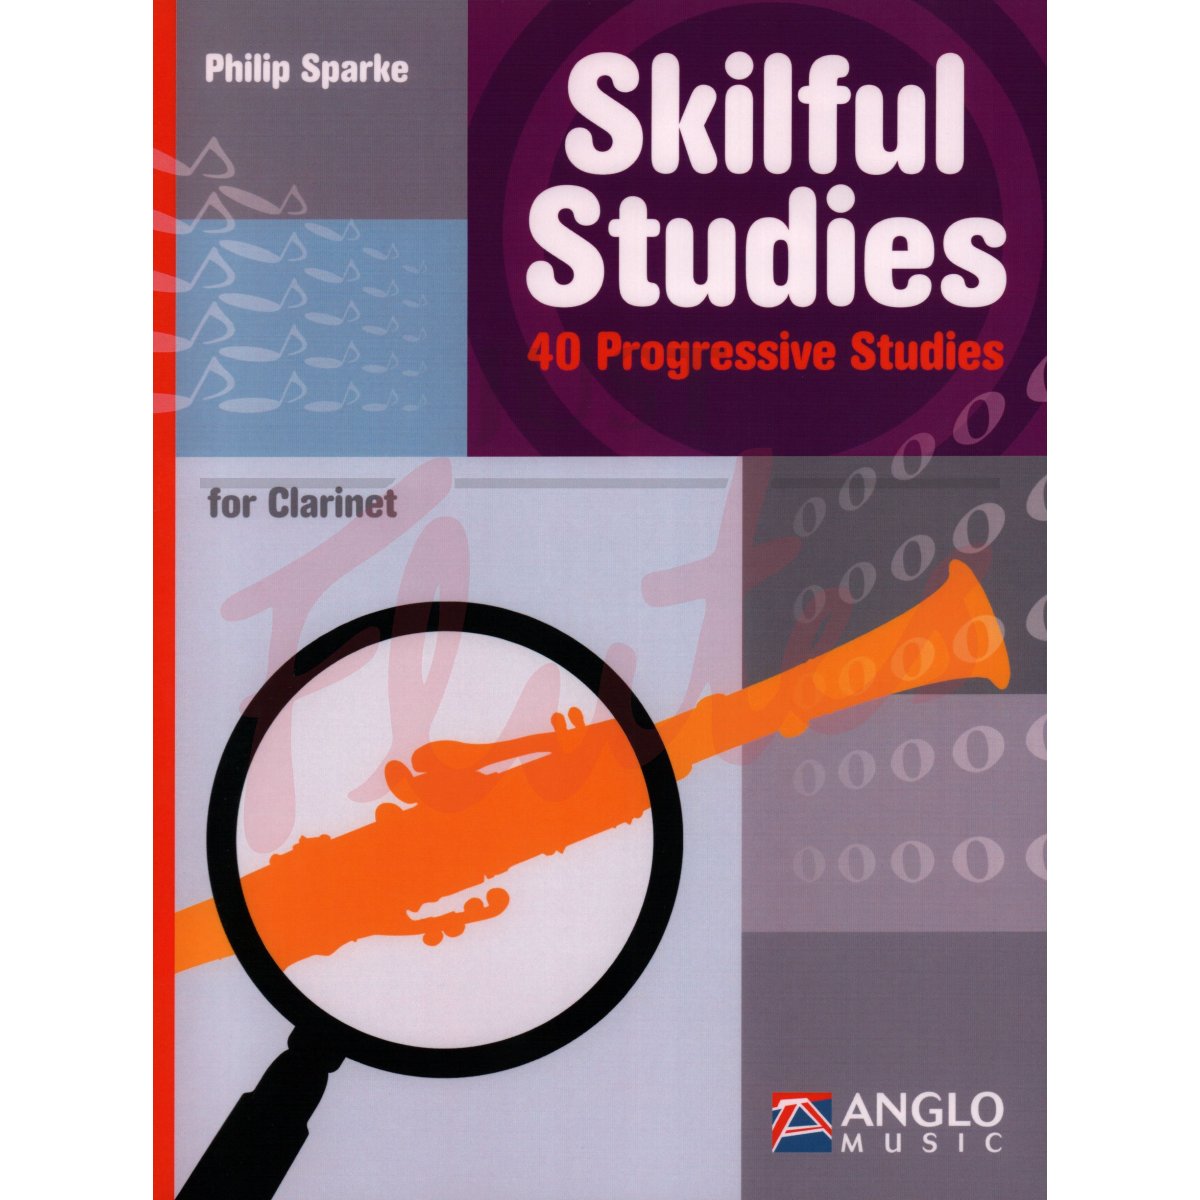 Skilful Studies for Clarinet